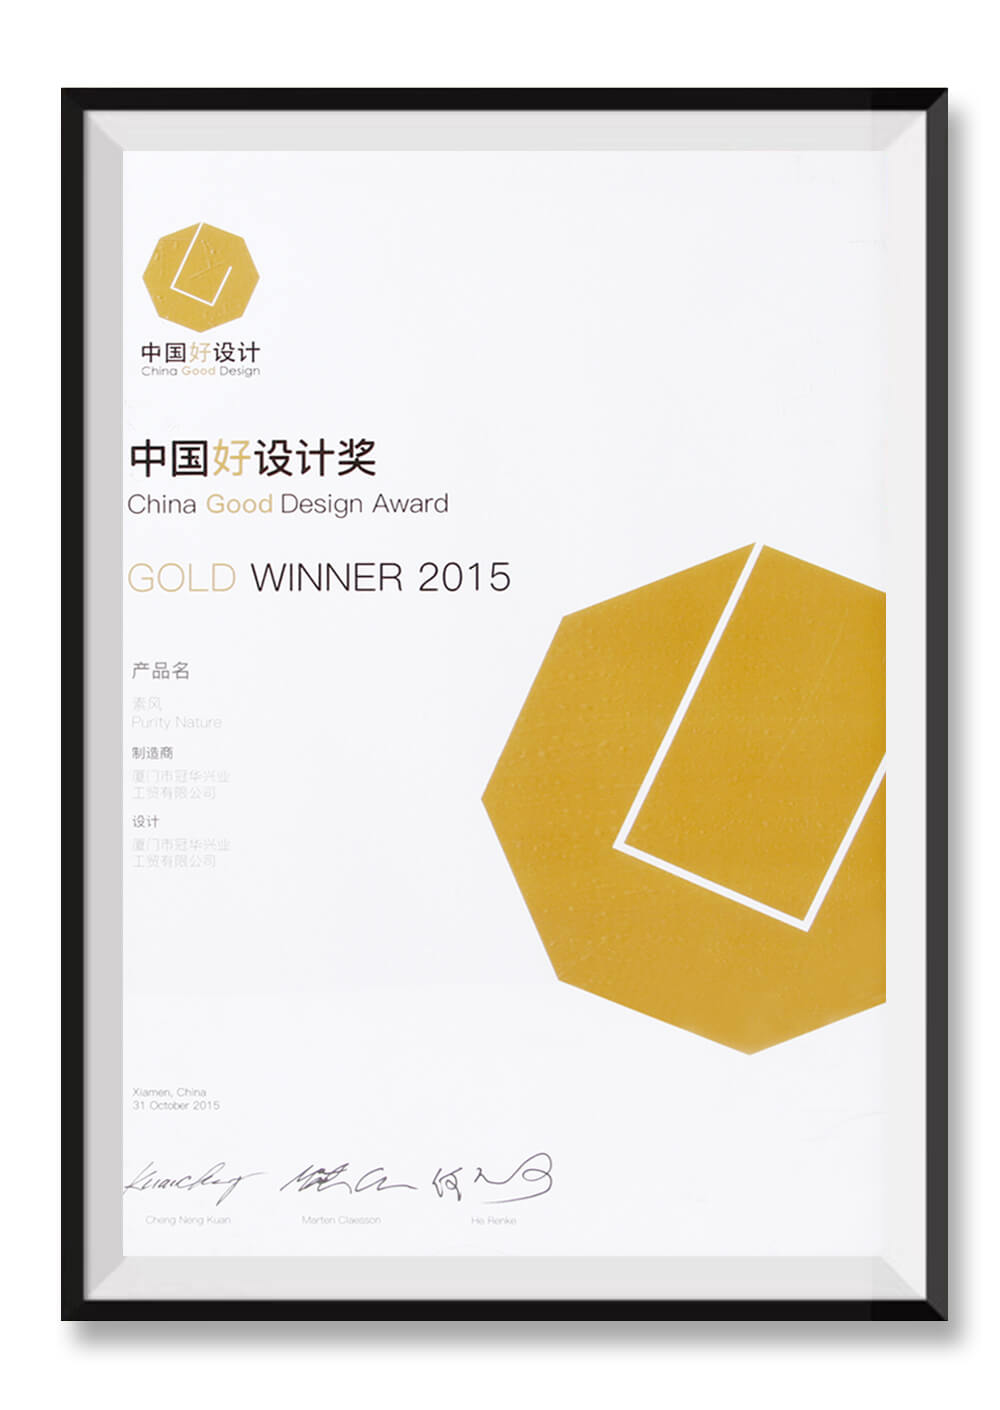 China good design award gold winner certificate